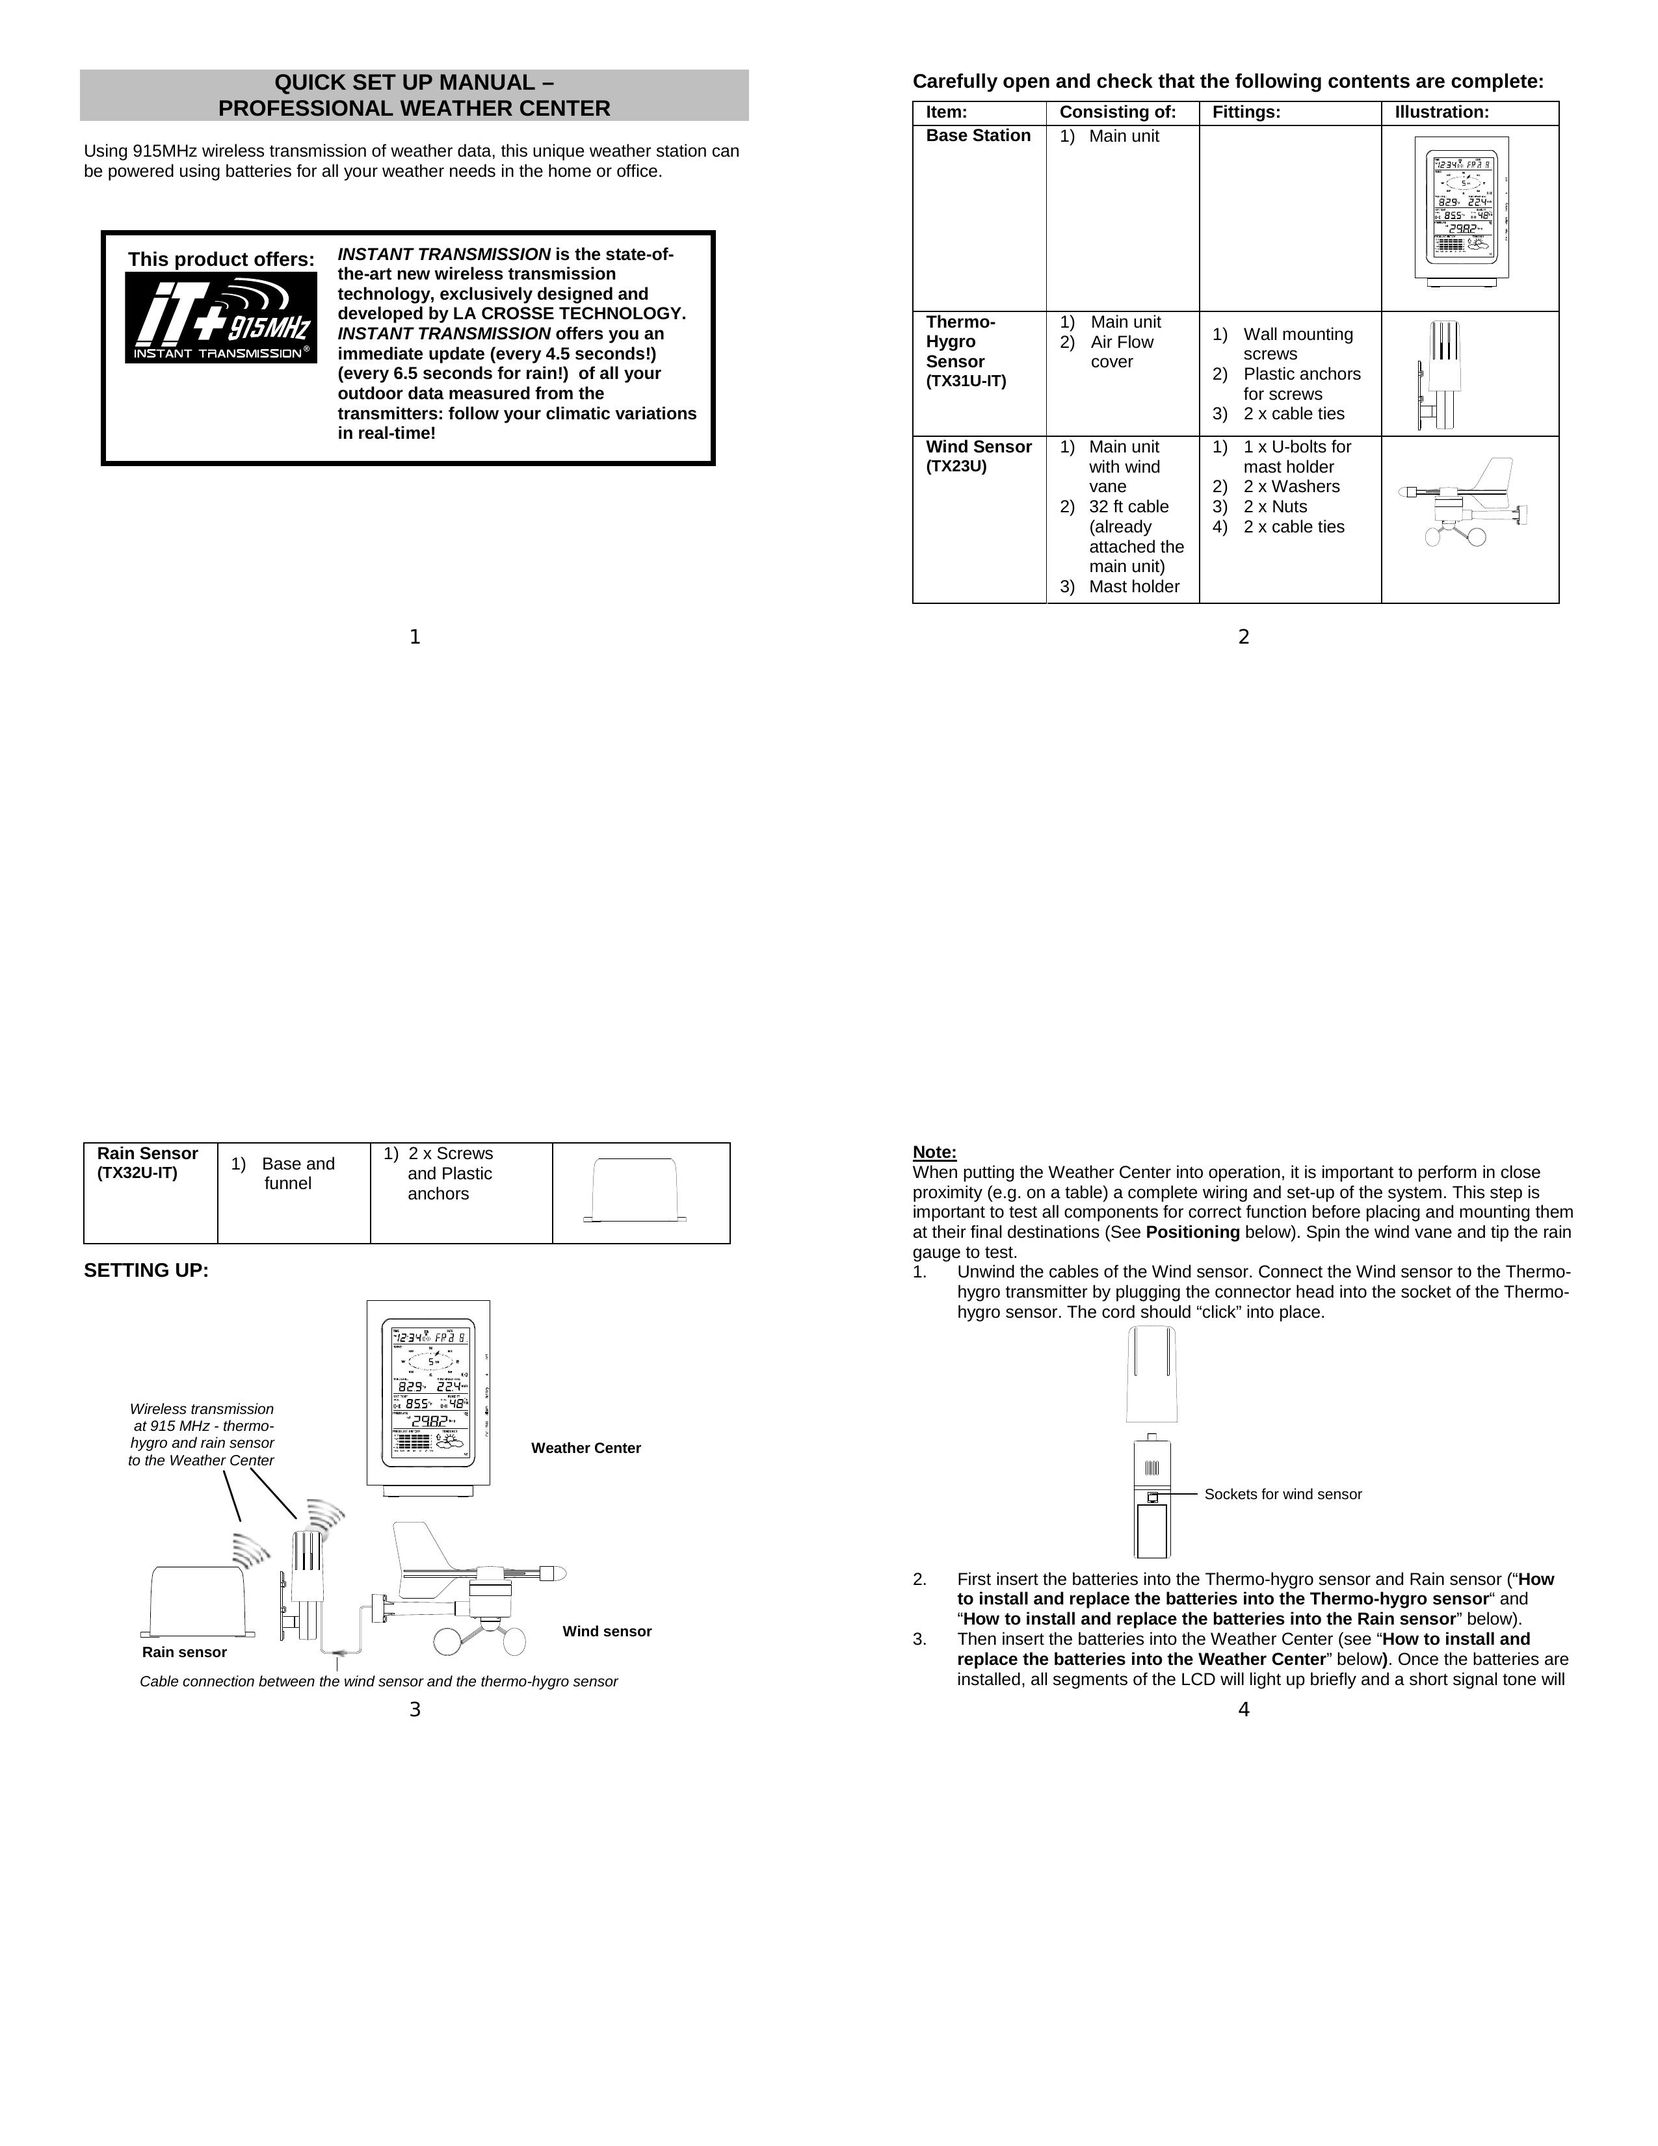 La Crosse Technology TX31U-IT Portable Radio User Manual